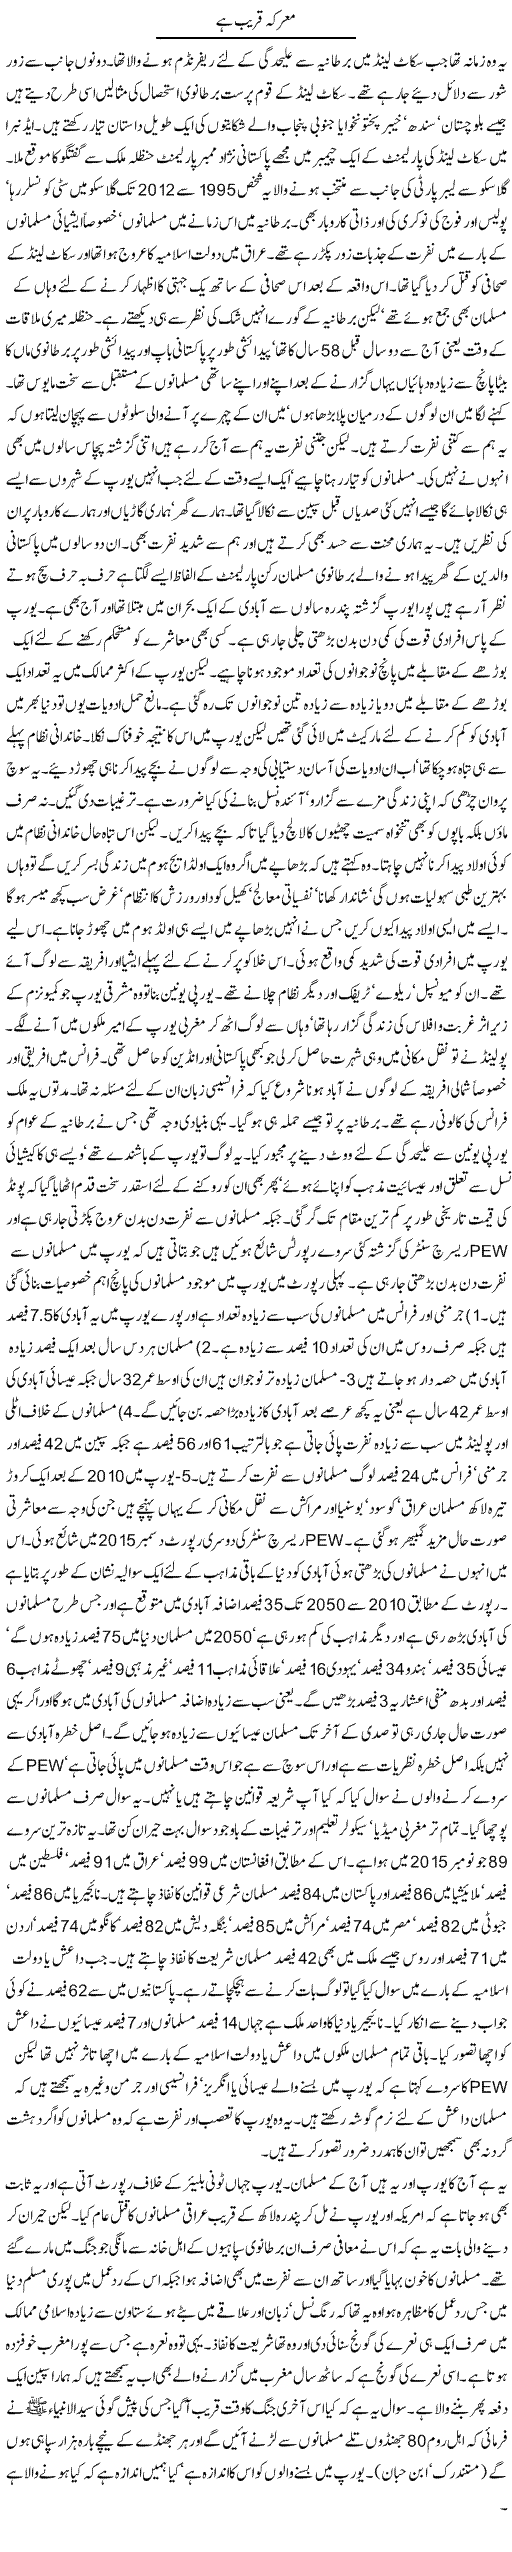 Maarka Qareeb Hai | Orya Maqbool Jan | Daily Urdu Columns